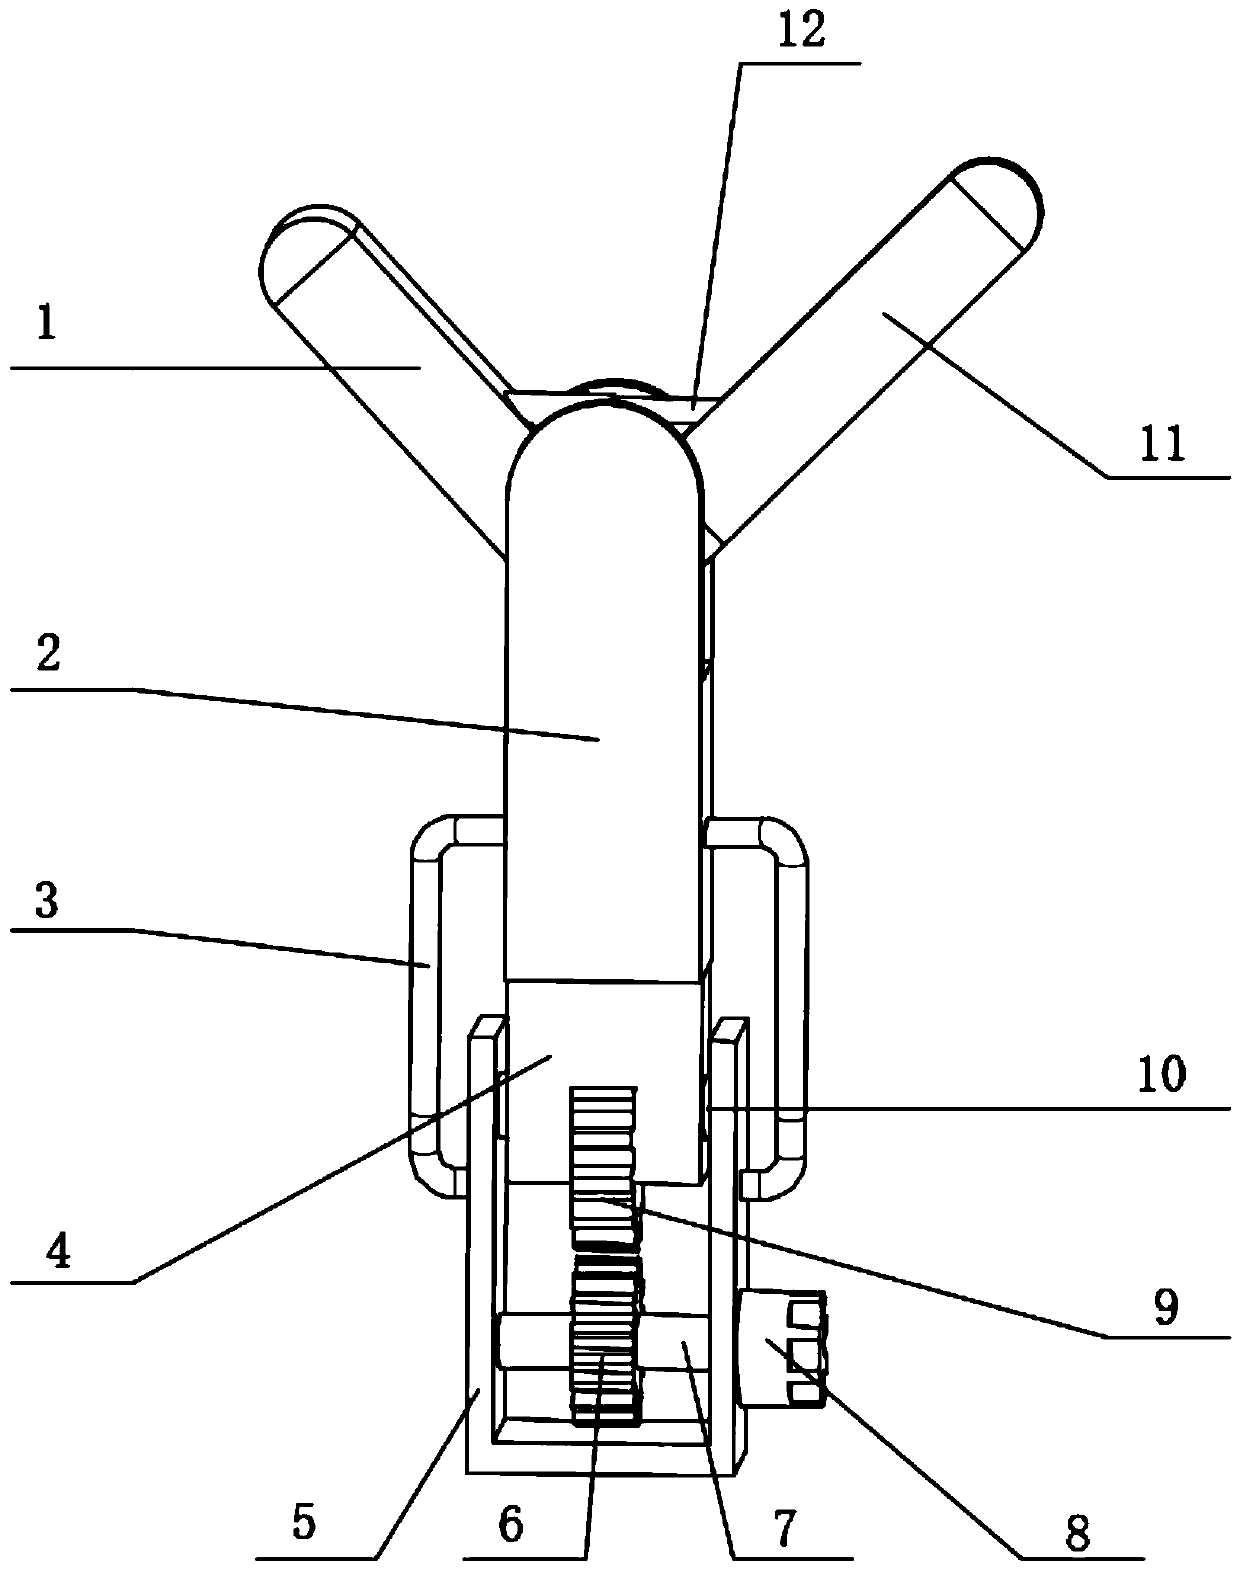 Manual three-freedom-degree micro manipulator for minimally invasive surgery